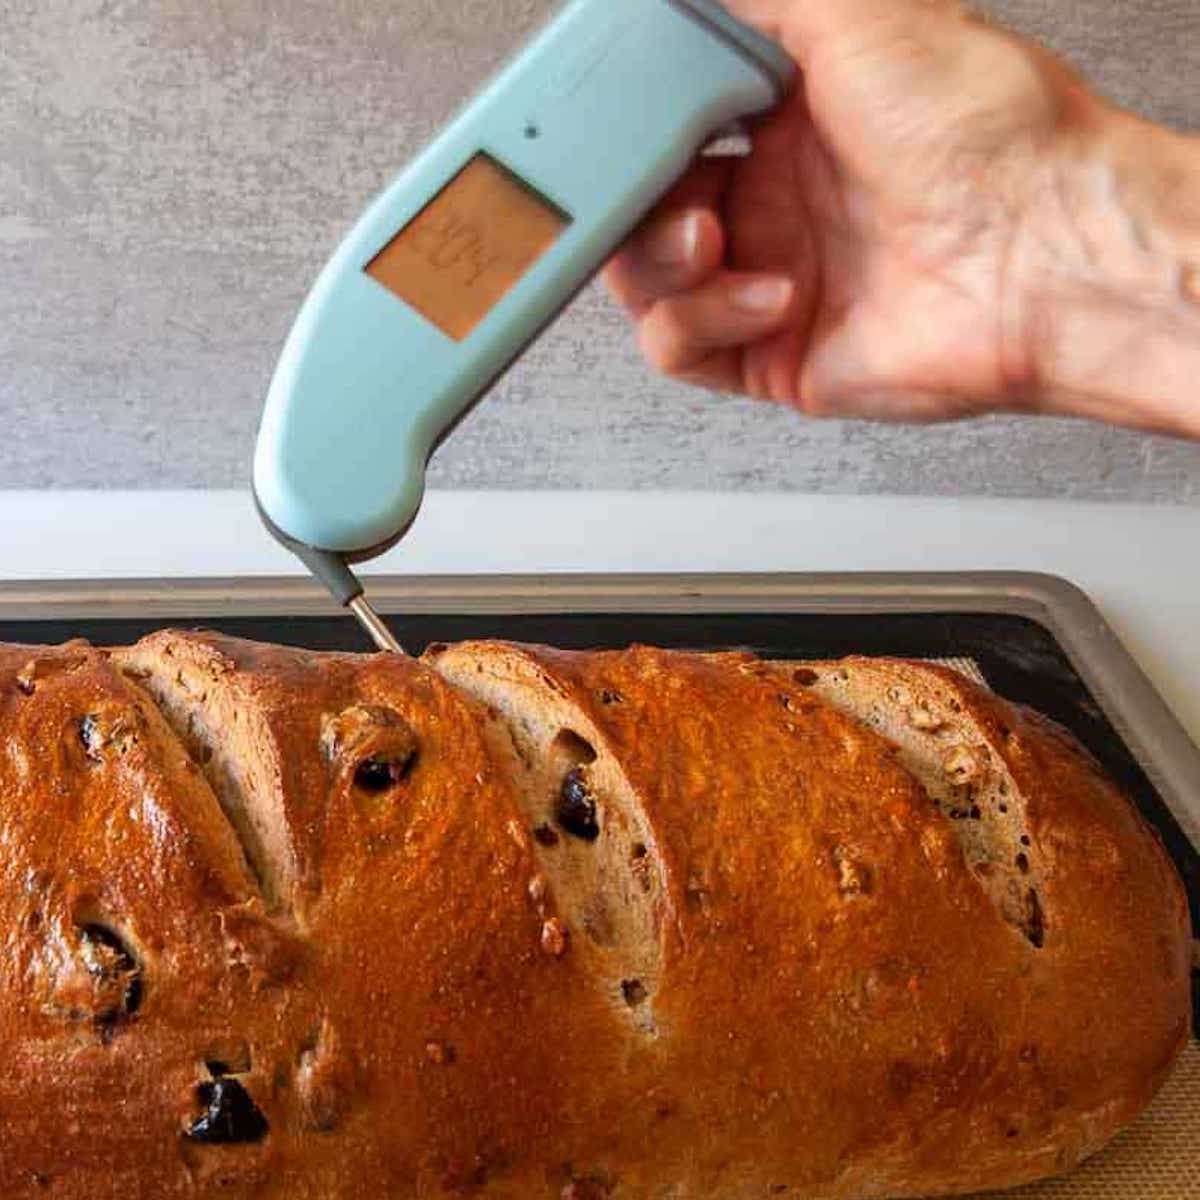 testing baked loaf for internal temperature